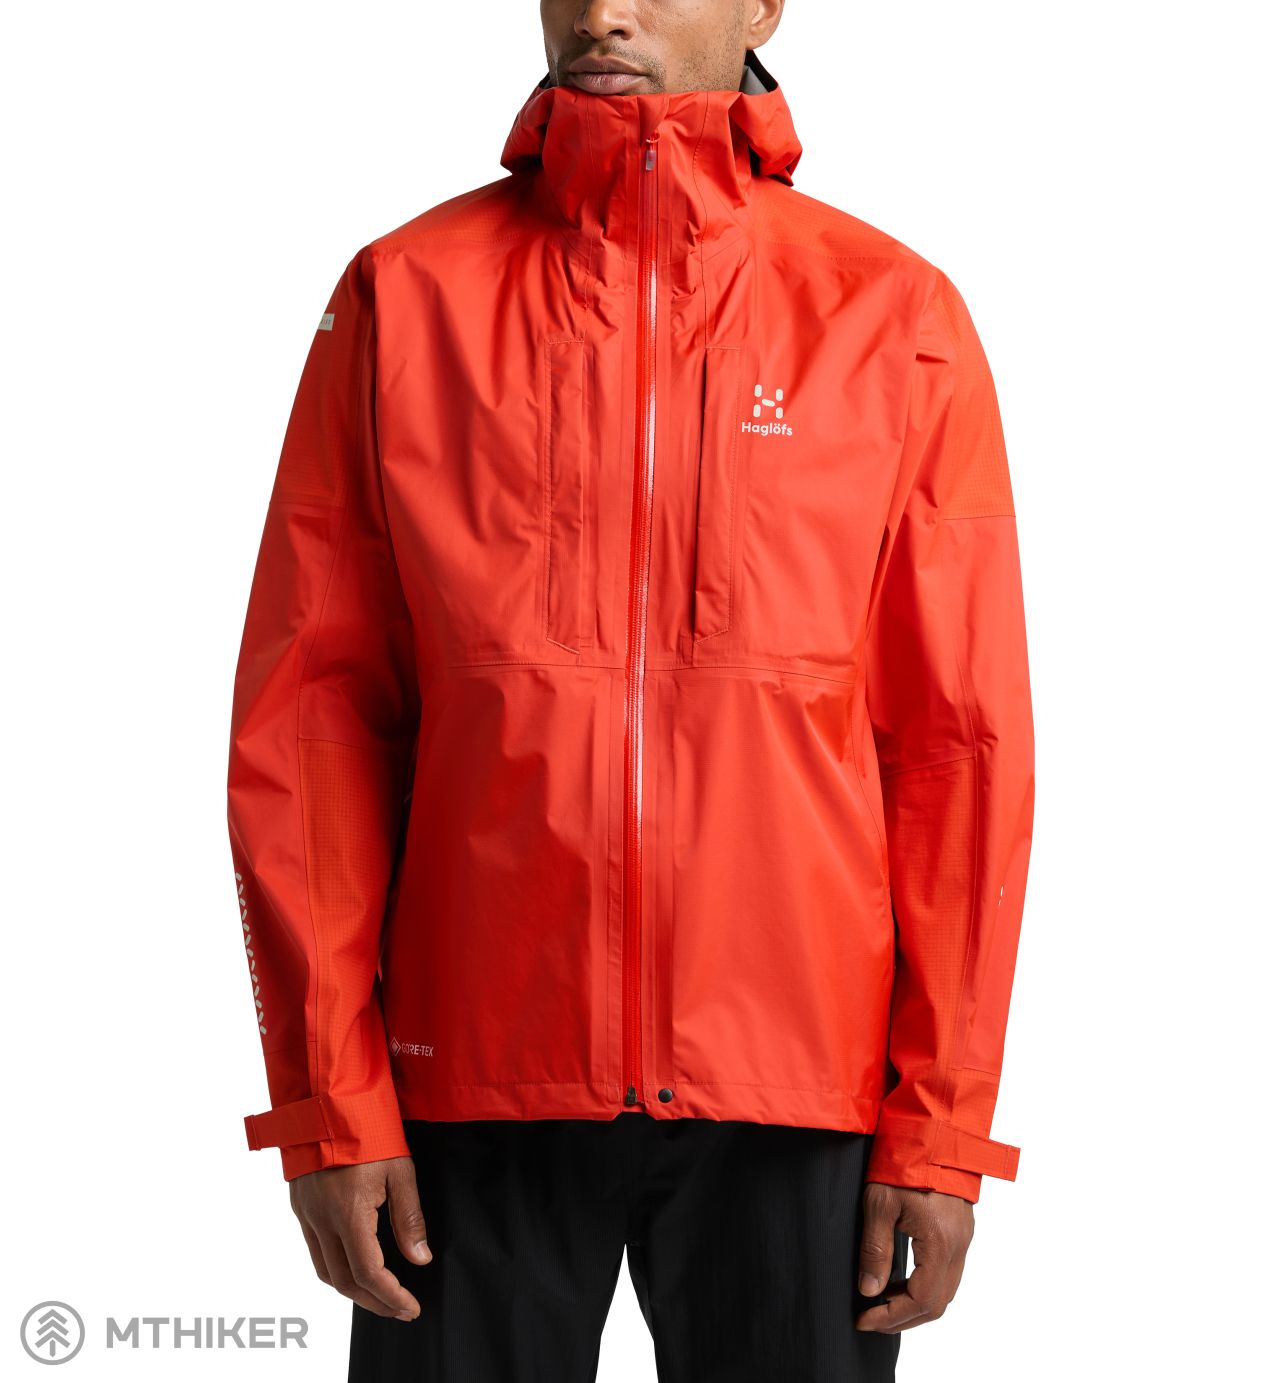 Haglöfs LIM Rugged GTX jacket, red - MTBIKER.shop